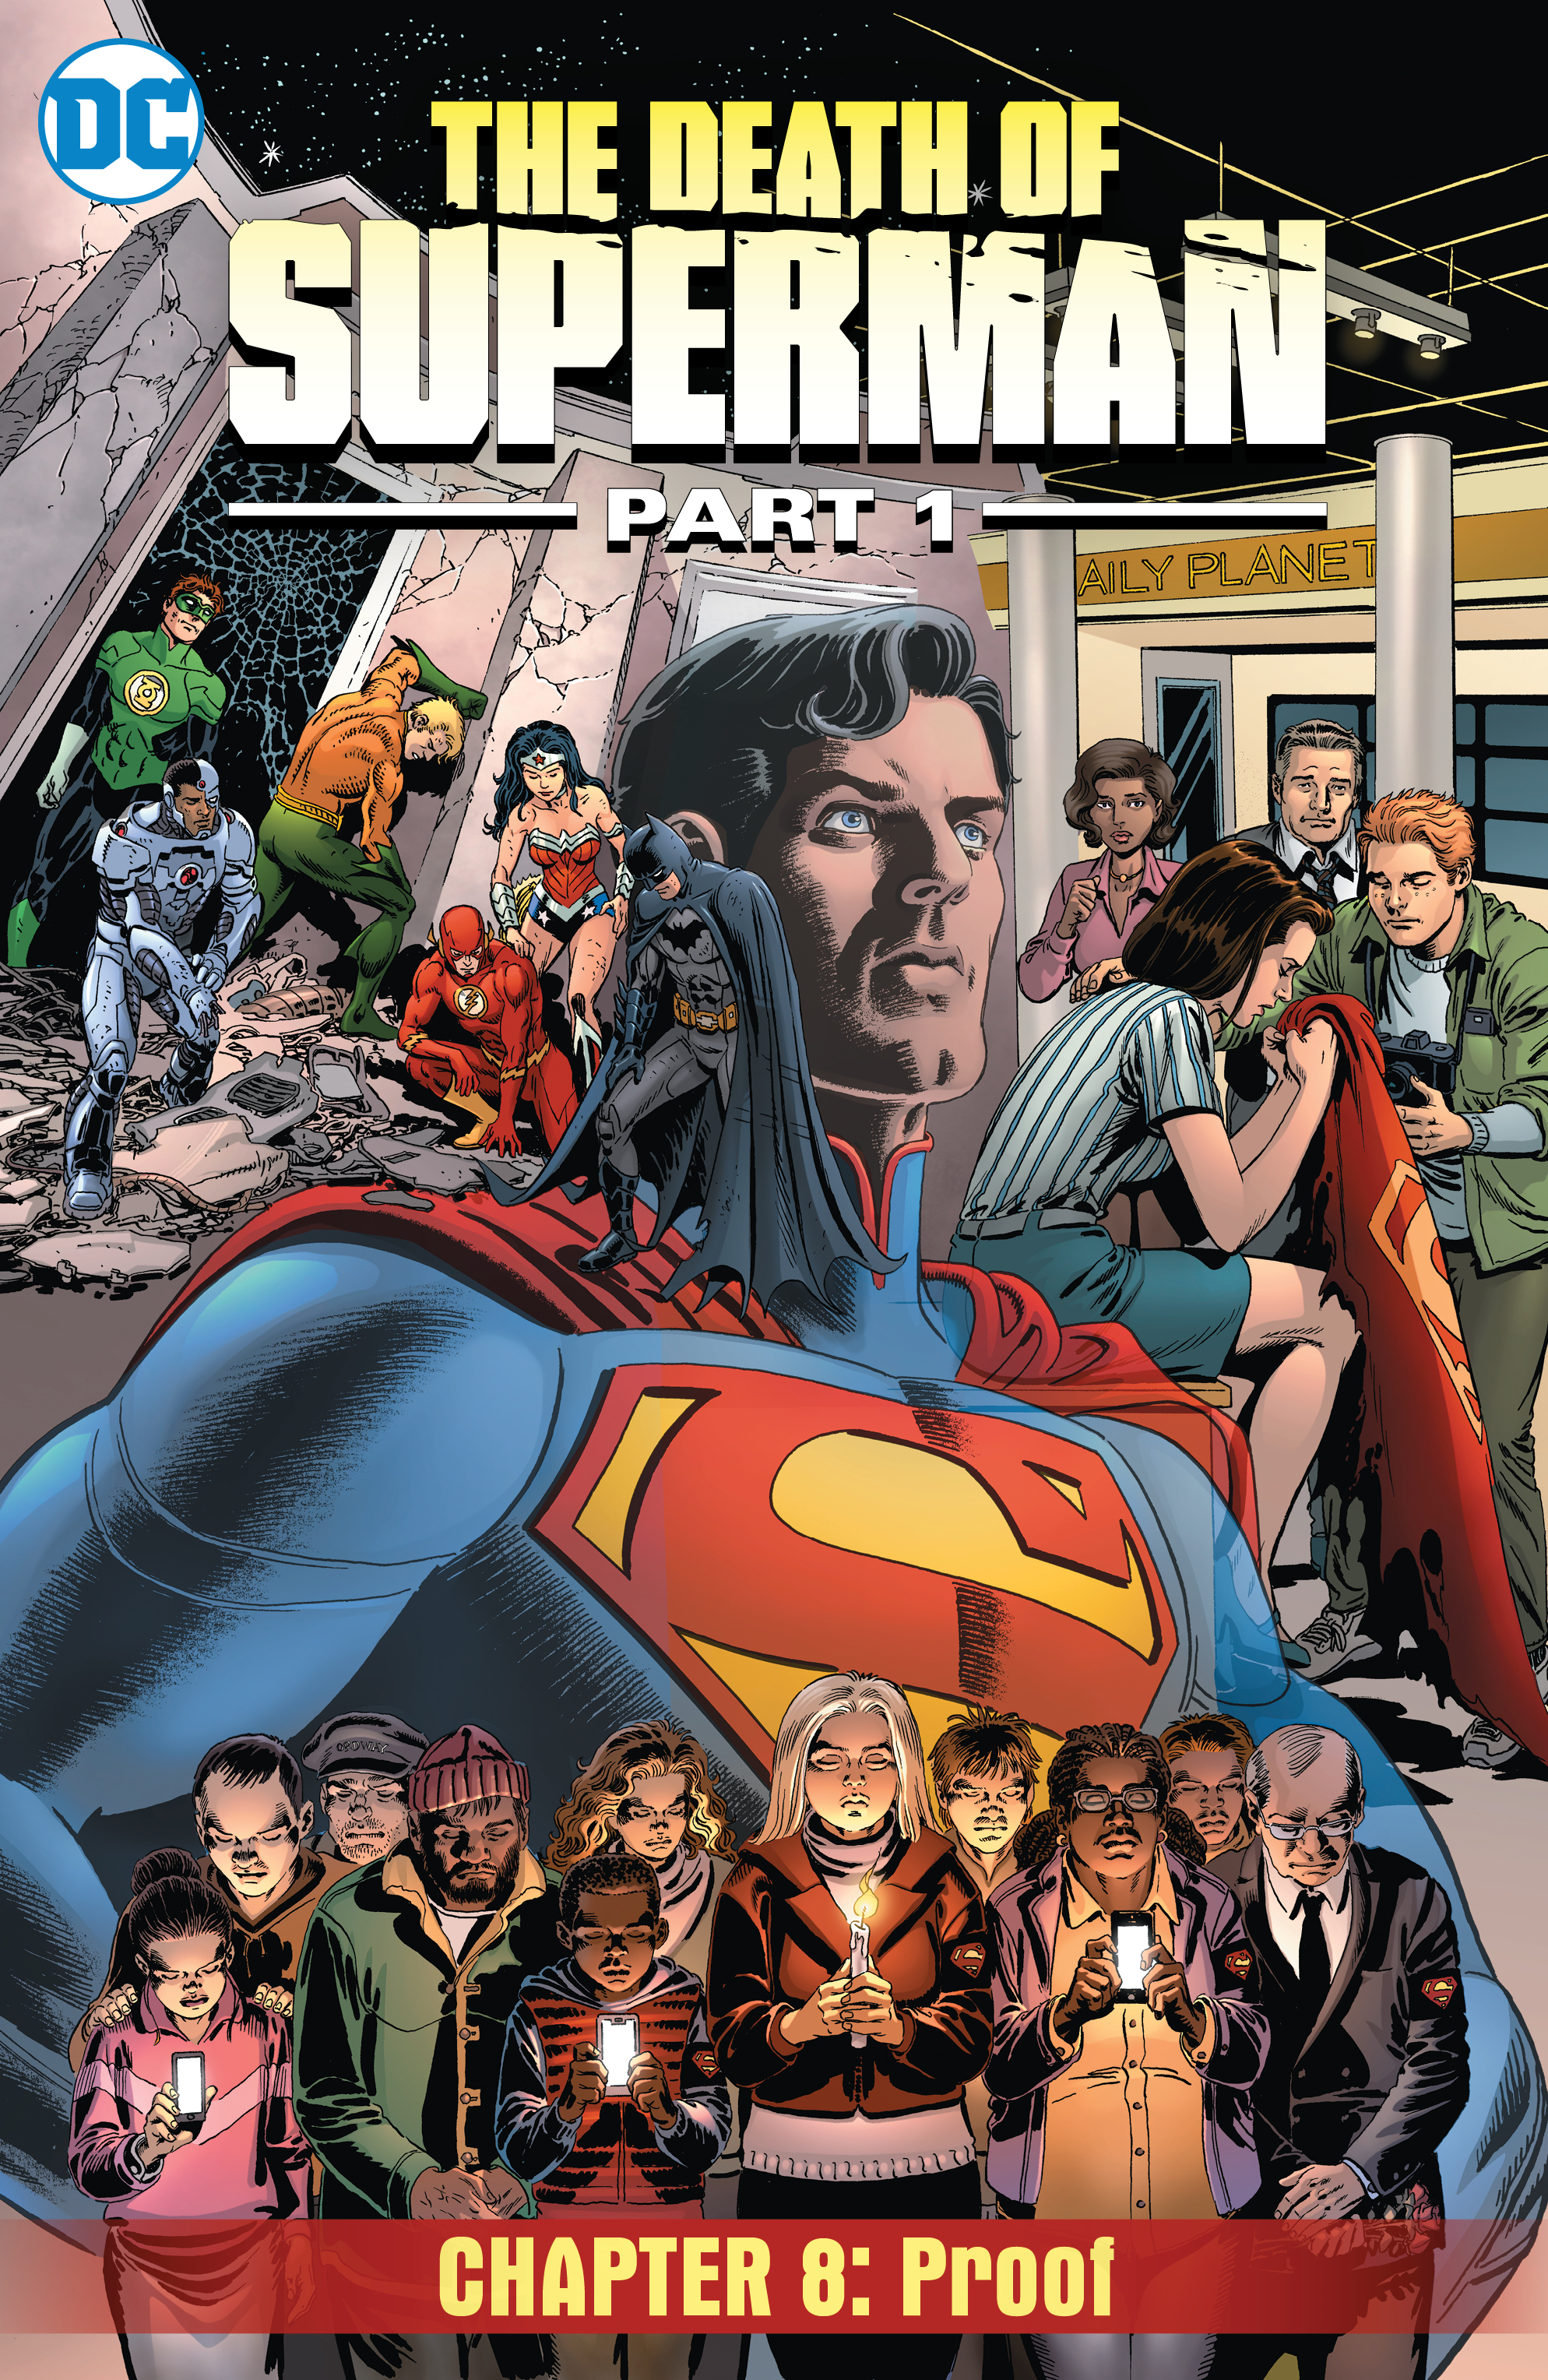 Death of Superman, Part 1 #8 preview images